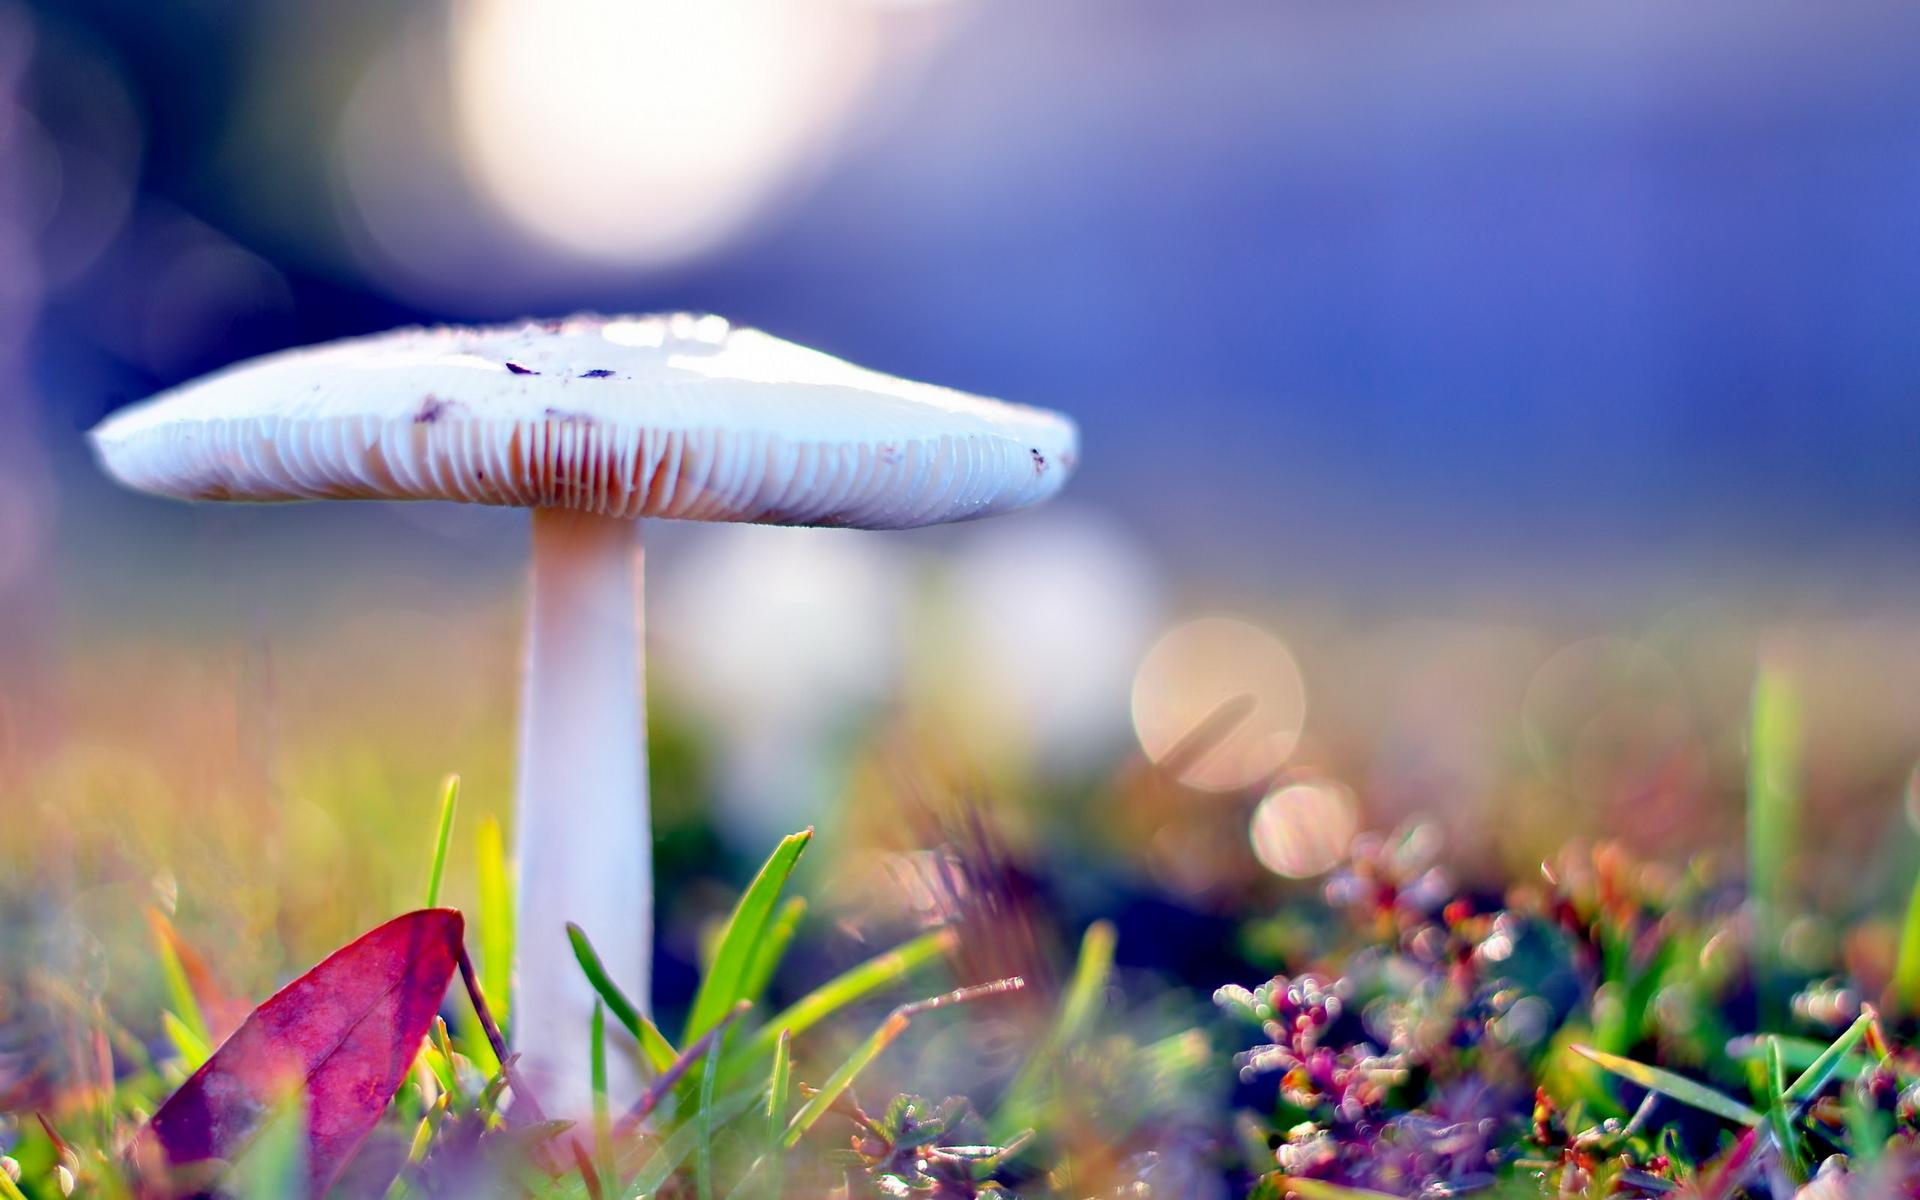 cool mushroom picture